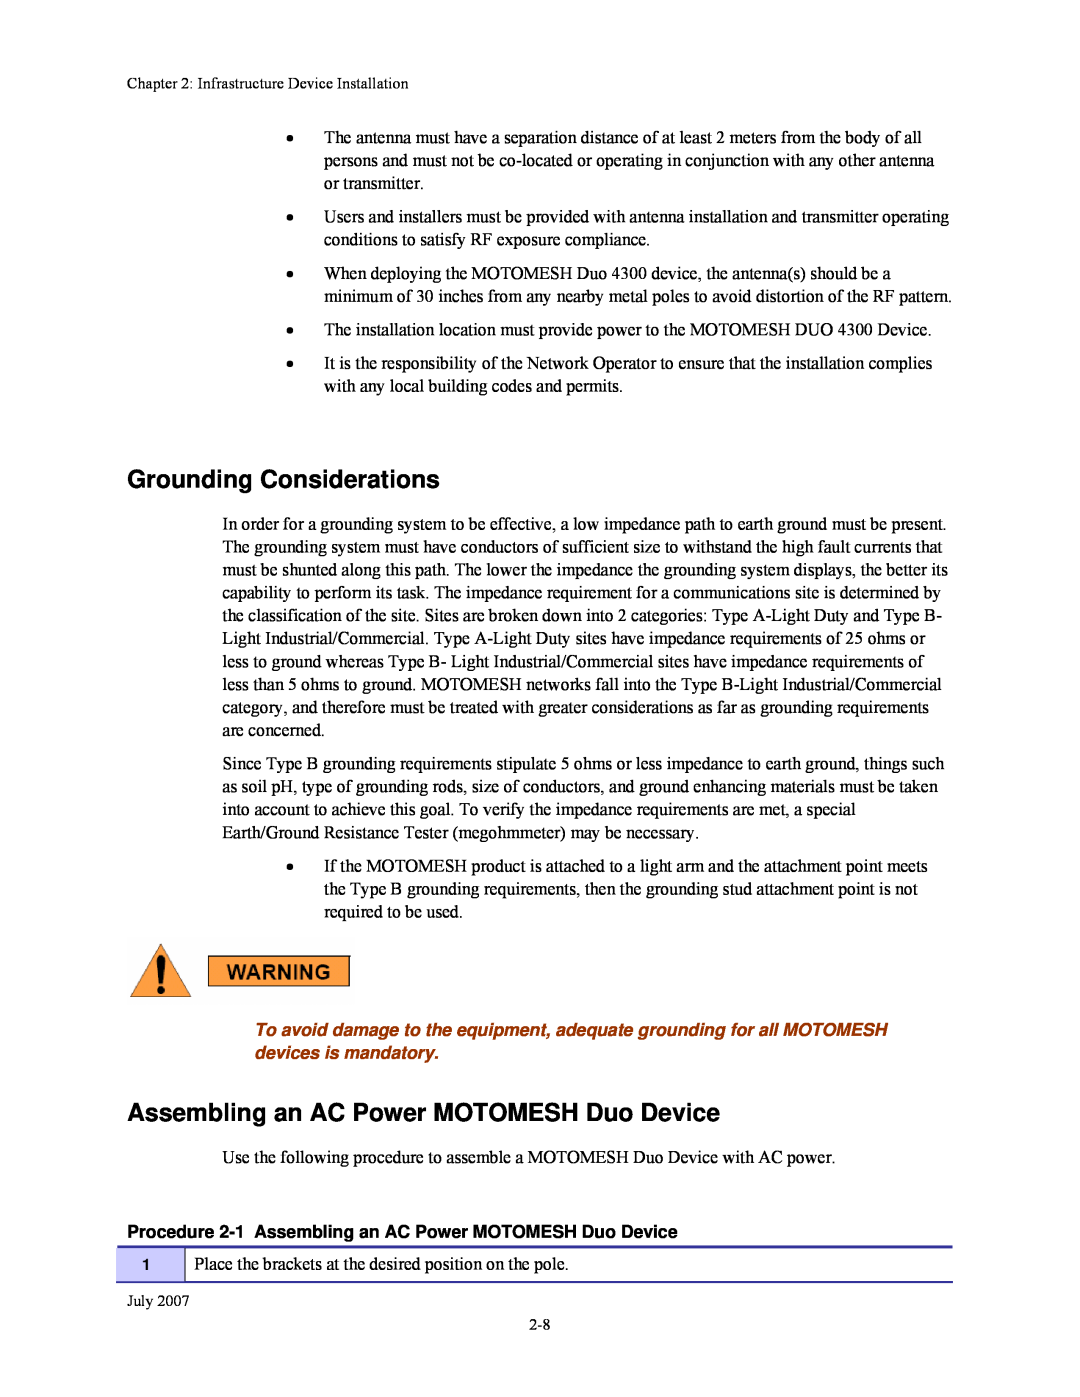 Nikon 4300 manual Grounding Considerations, Assembling an AC Power MOTOMESH Duo Device 